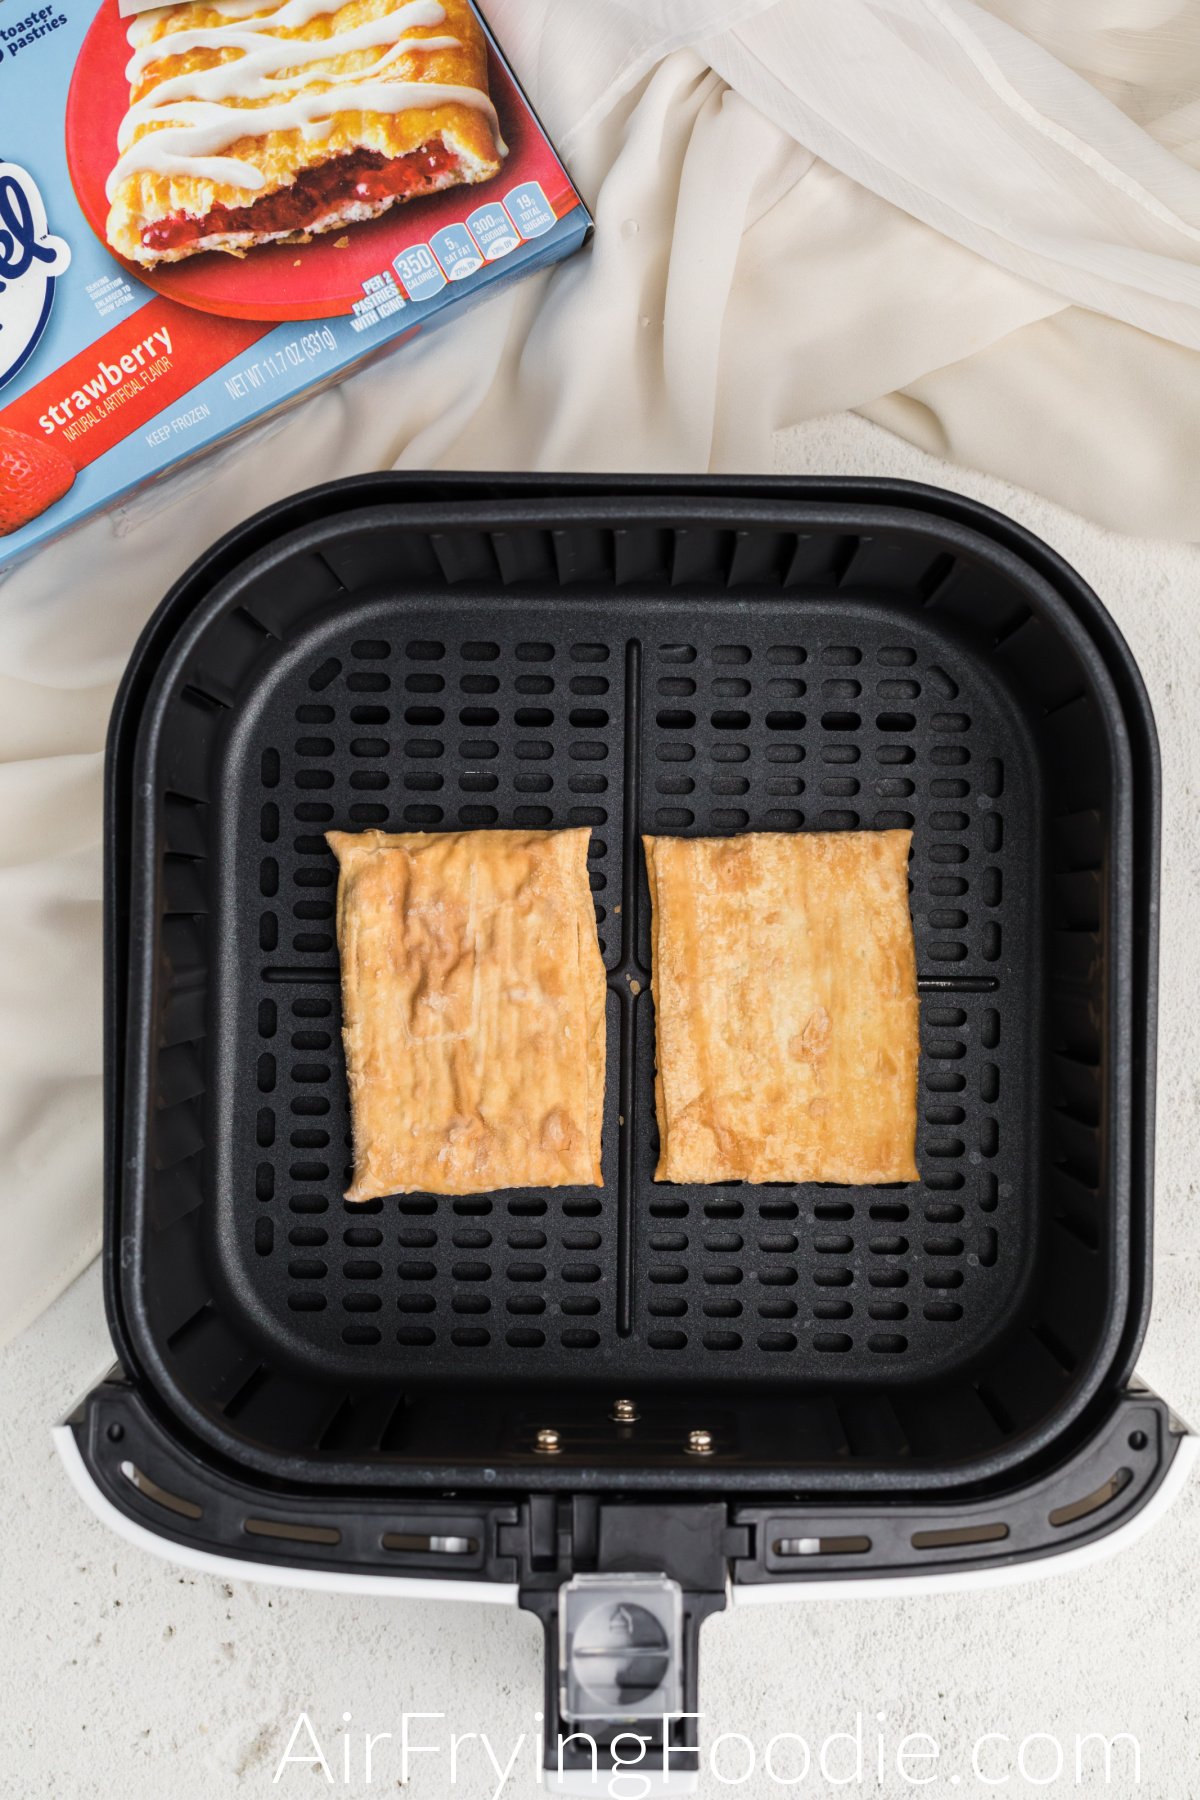 Frozen toaster strudel in air fryer basket.